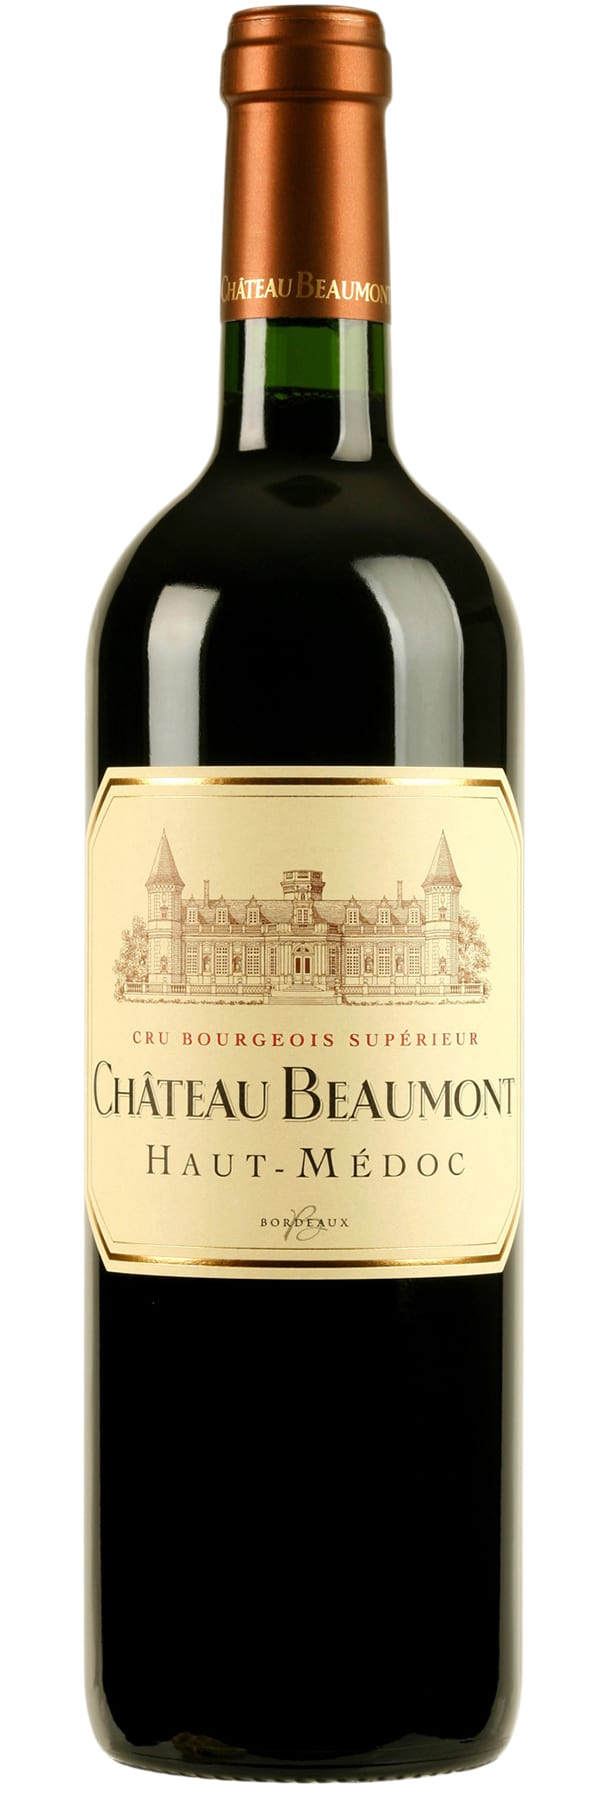 2011 Chateau Beaumont Haut-Medoc 1.5 liters фото